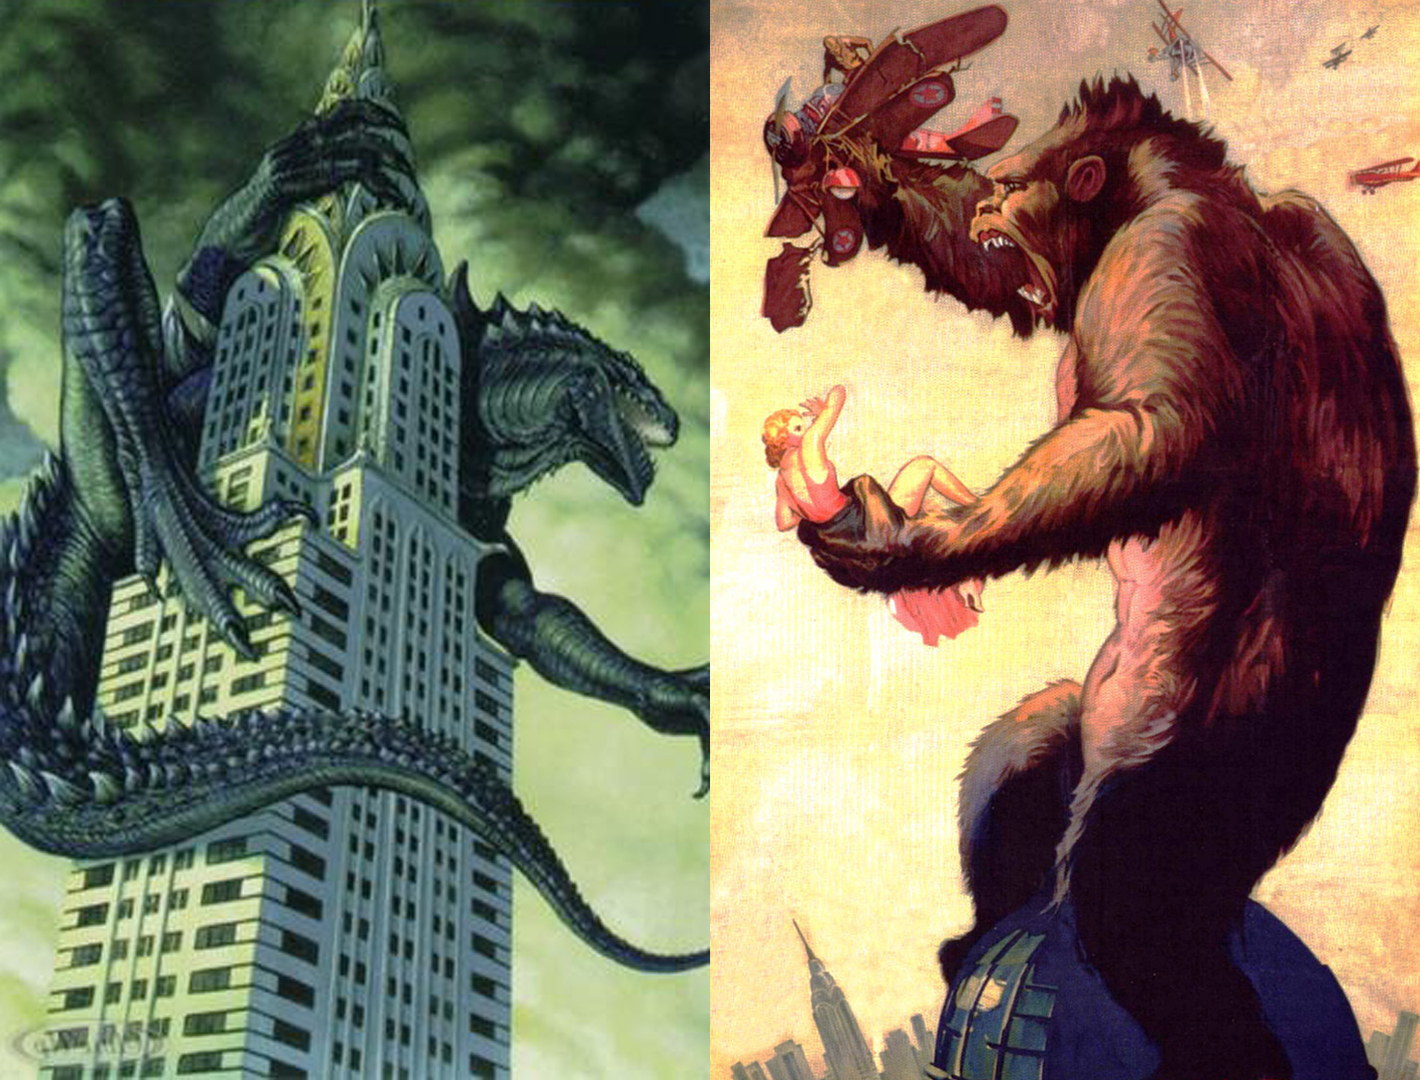 http://2.bp.blogspot.com/-2Tsph85XfDE/TVyNvr27ULI/AAAAAAAAADY/DlkCXoJtK3E/s1600/In+their+Empire+State+of+mind-+Godzilla+%2526+King+Kong.jpg